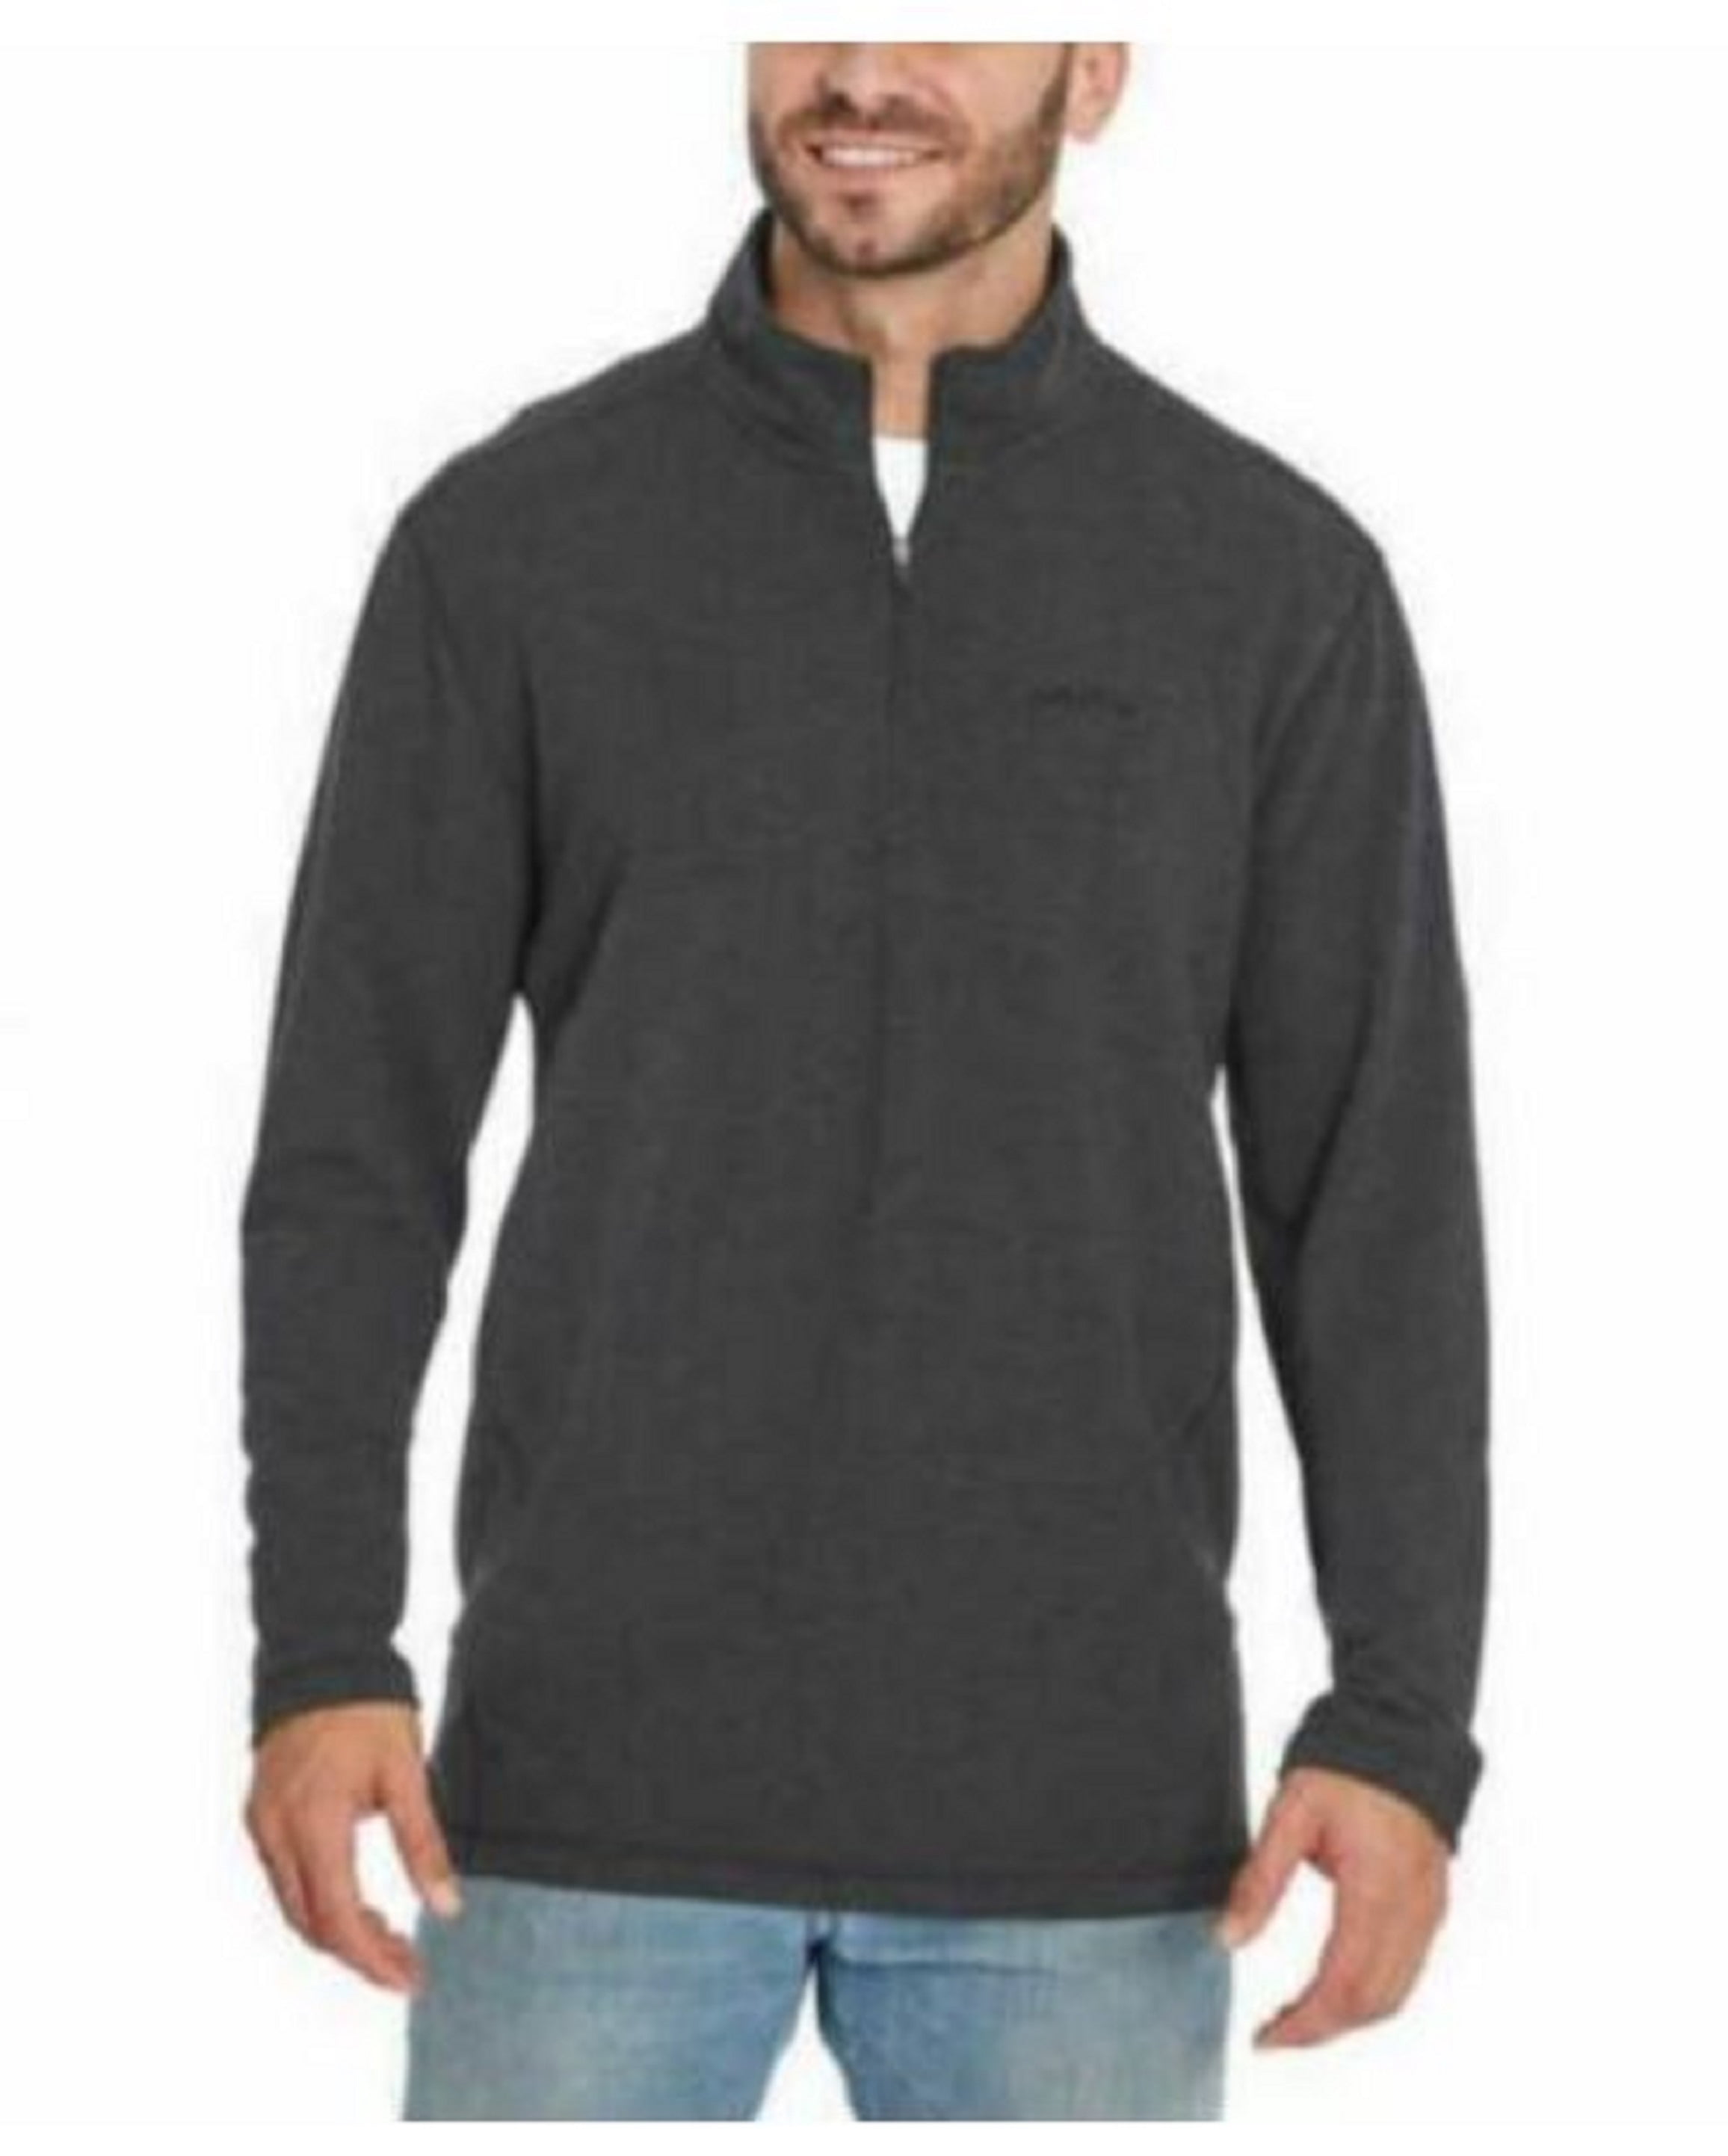 Select Size: S-XLT Orvis Men’s Fleece Lined Quarter Zip Pullover BROWN 